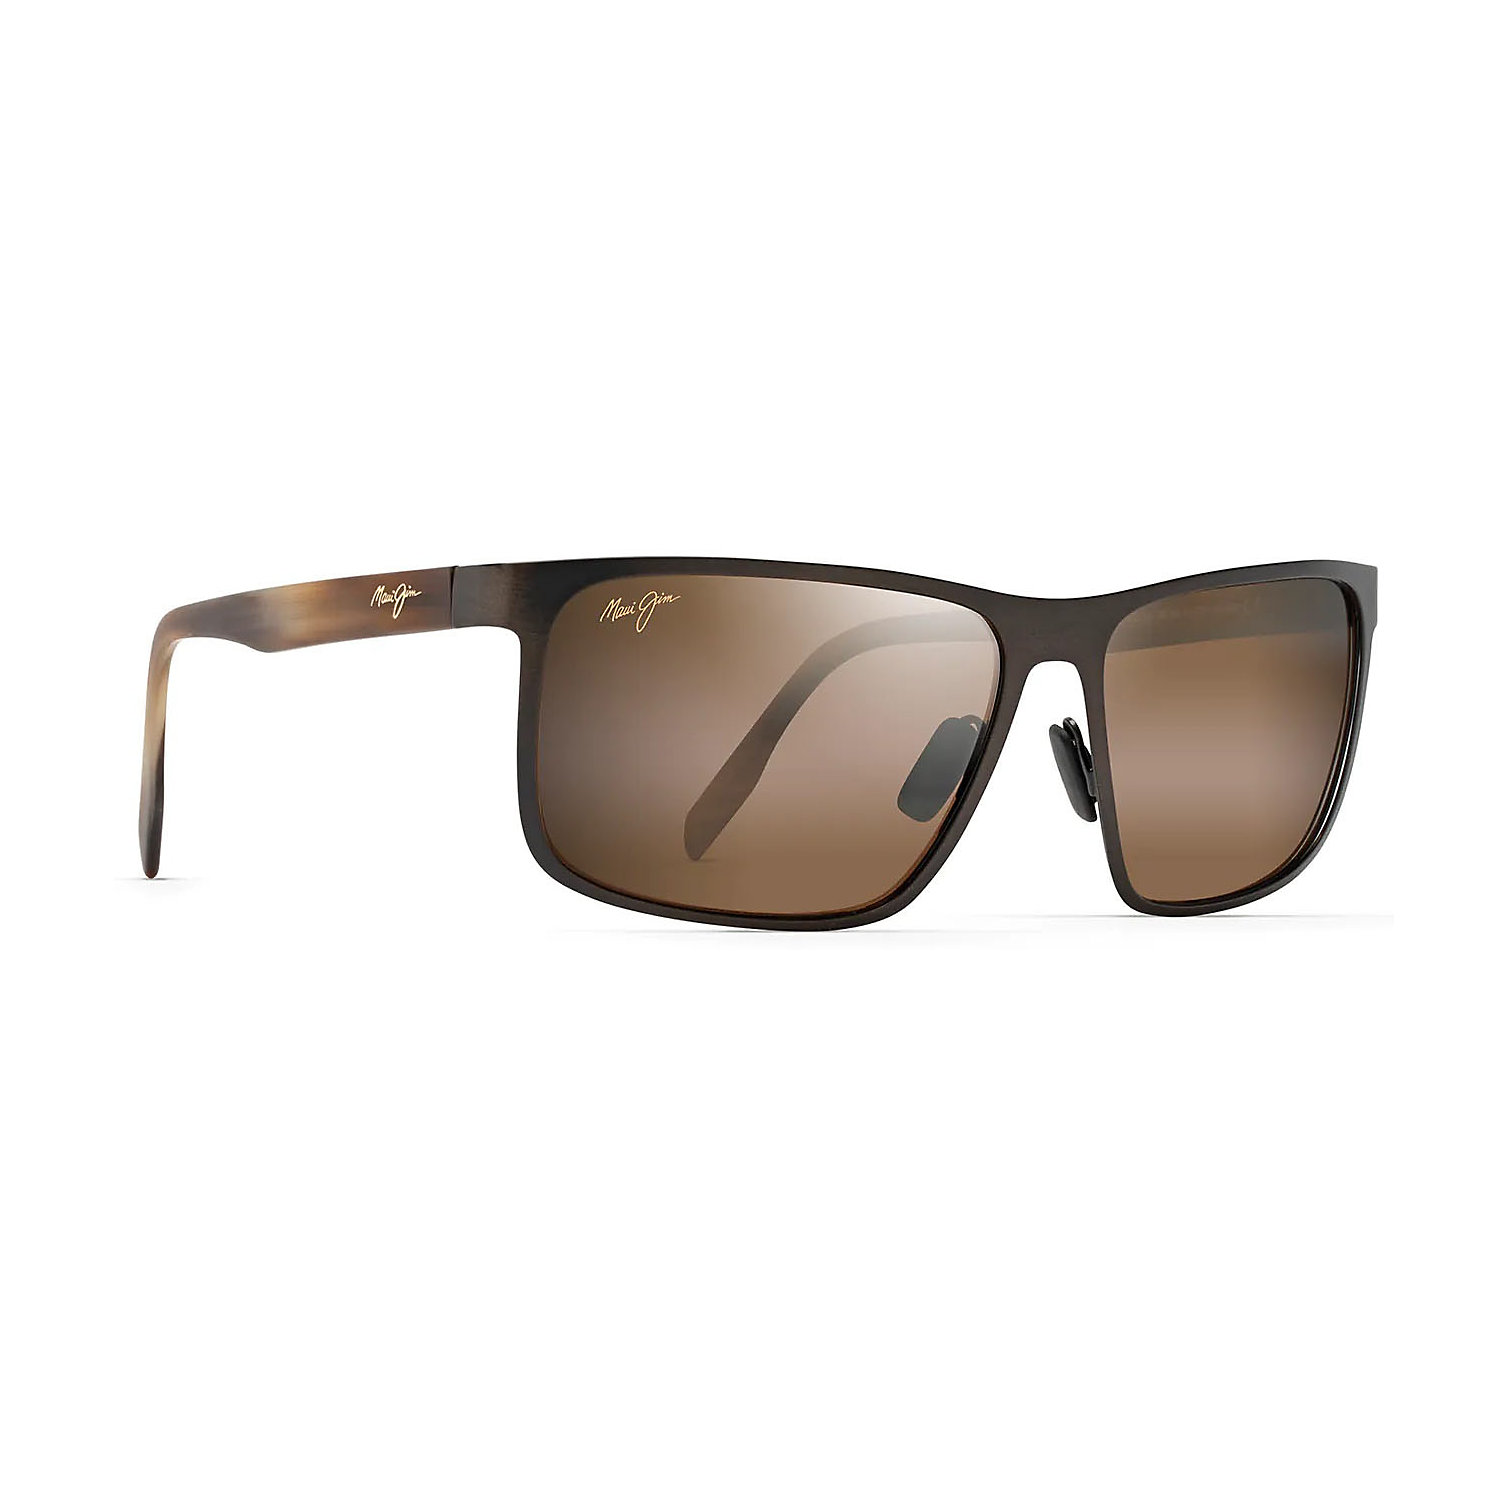 Maui Jim Wana Polarized Sunglasses